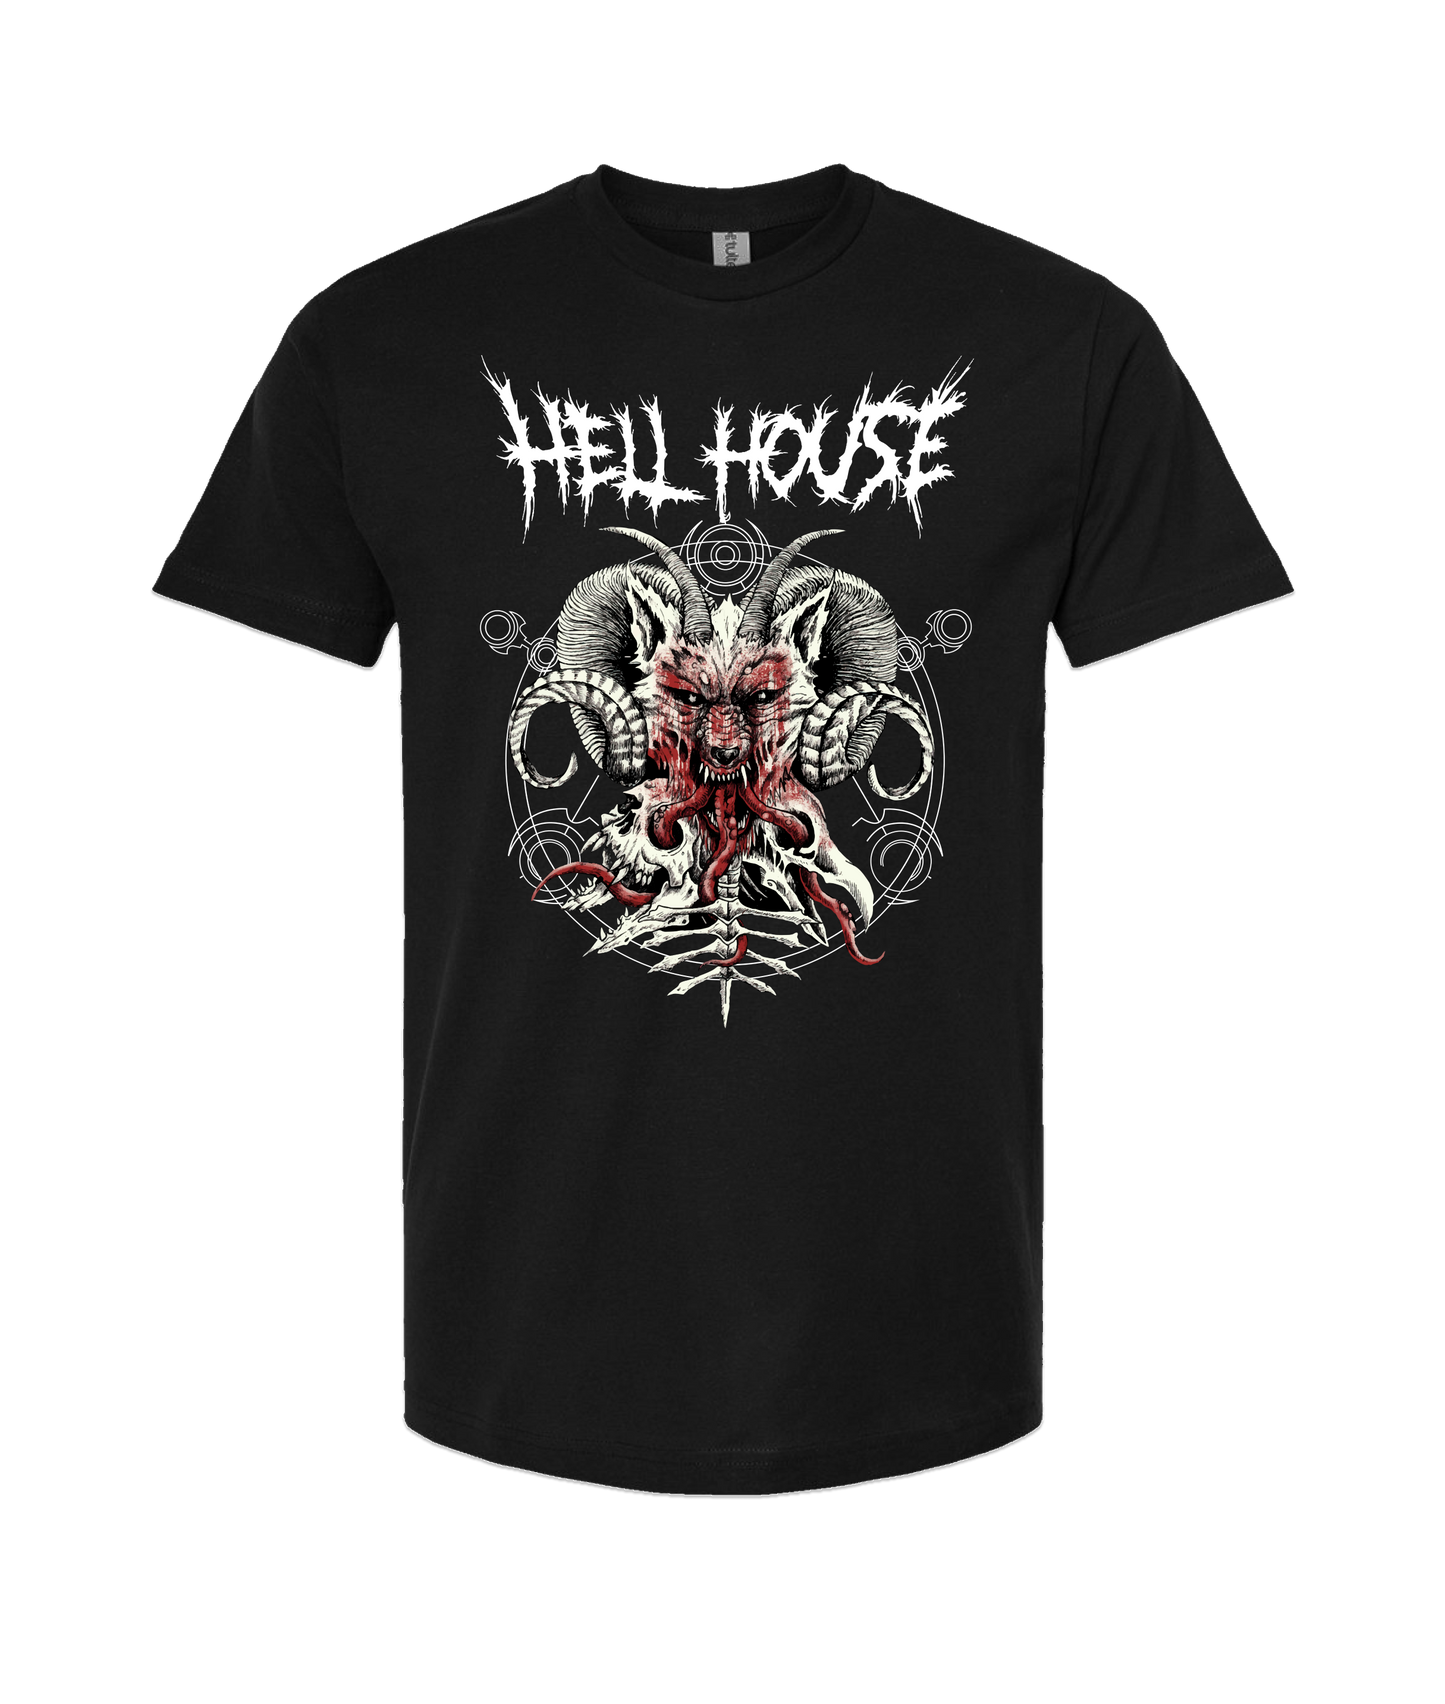 Hellhouse crypt - WOLFHORN - Black T-Shirt